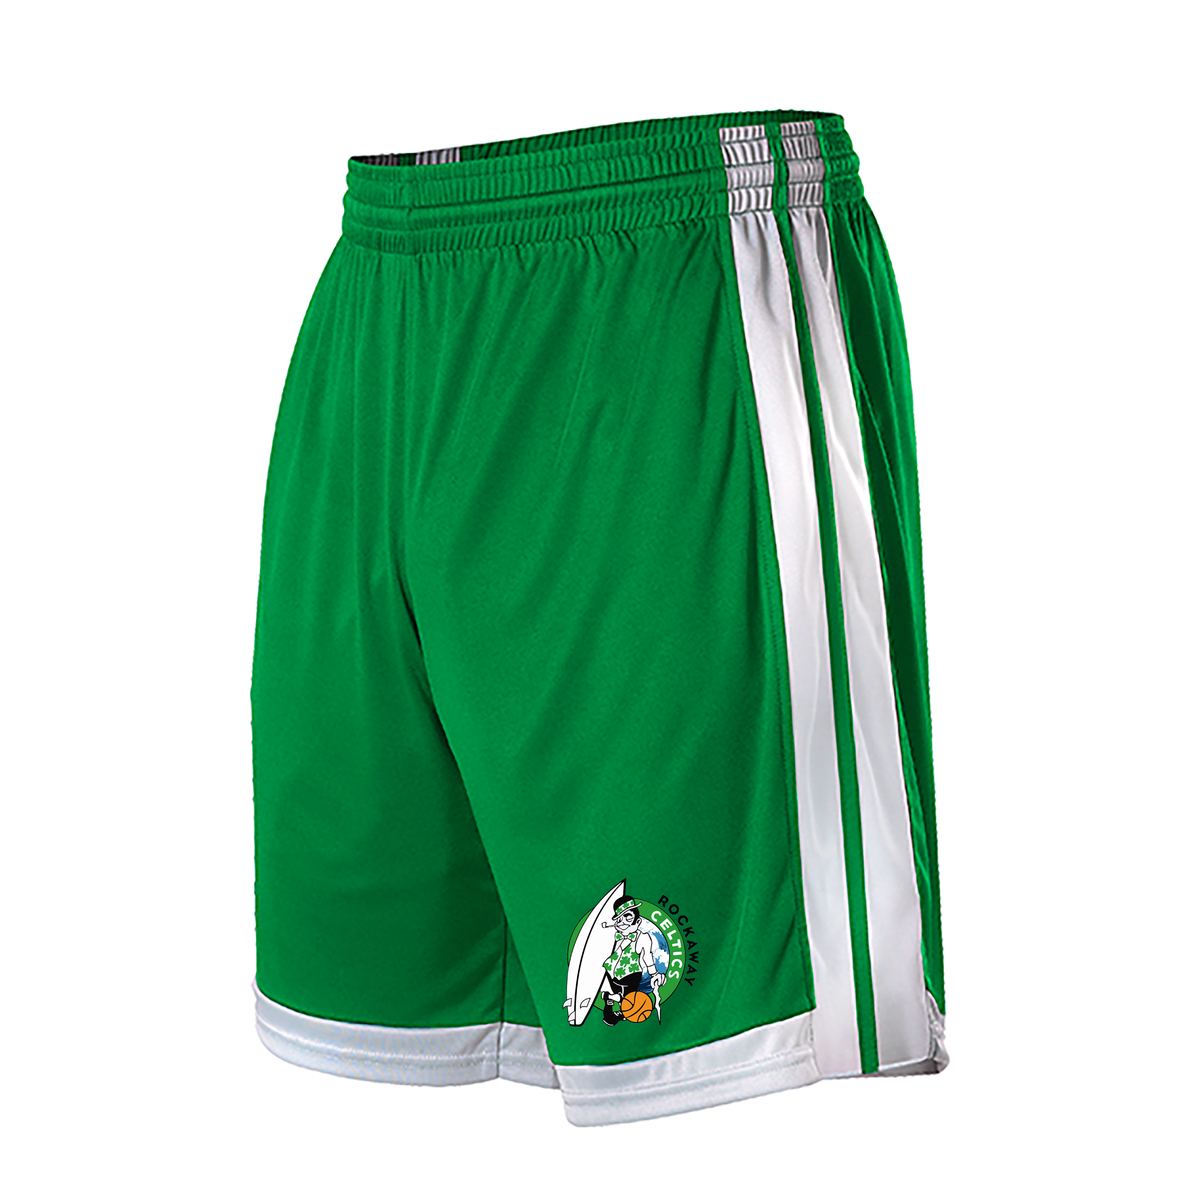 Rockaway Celtics Women's Single Ply Basketball Short